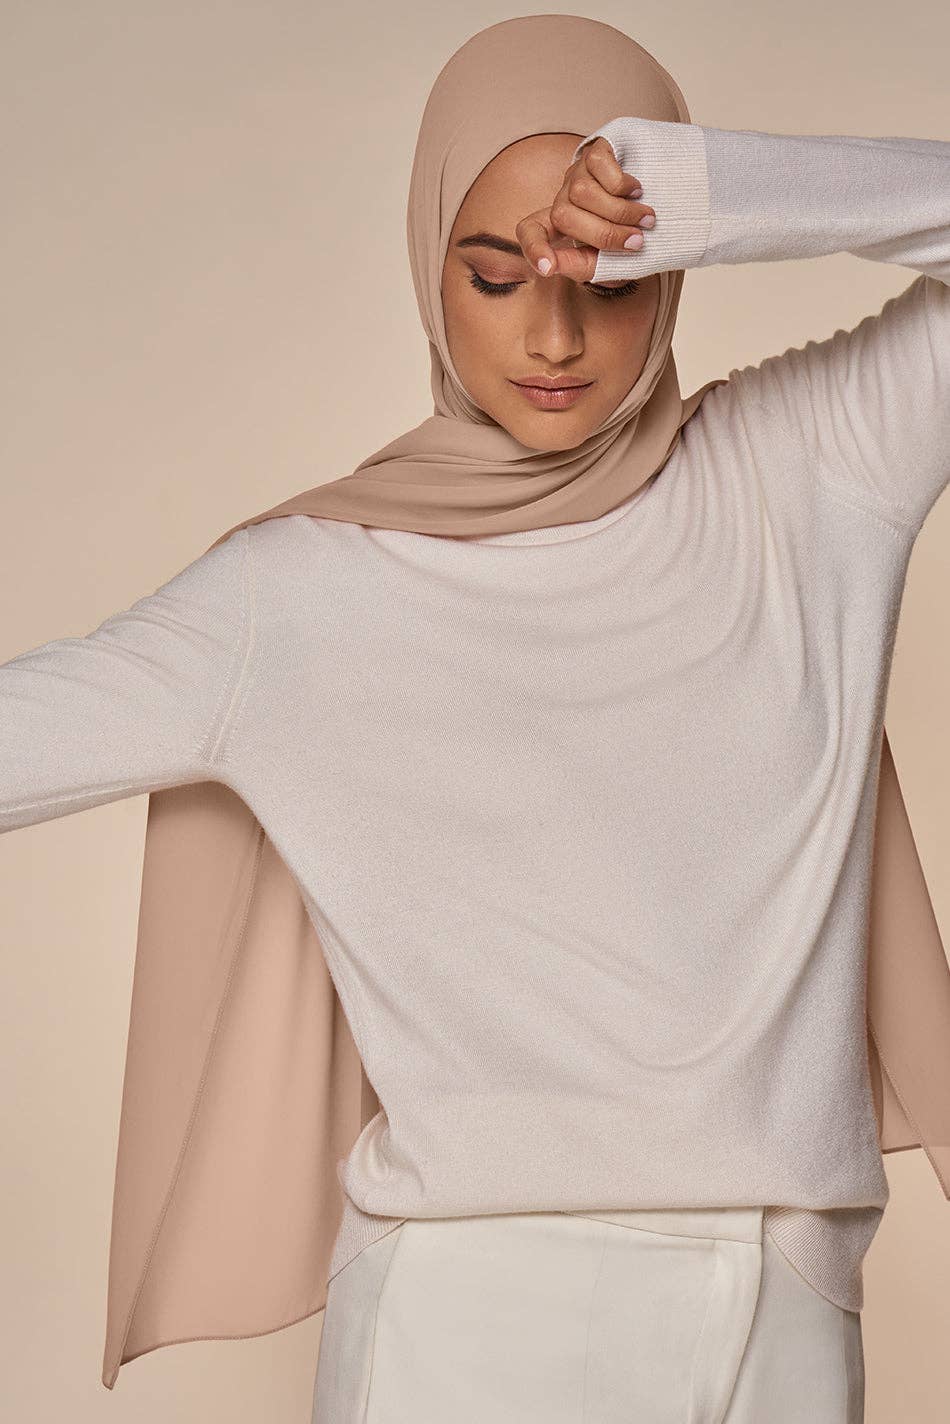 Everyday Chiffon Hijab - Blush: Square 40" x 40" / Blush / Chiffon